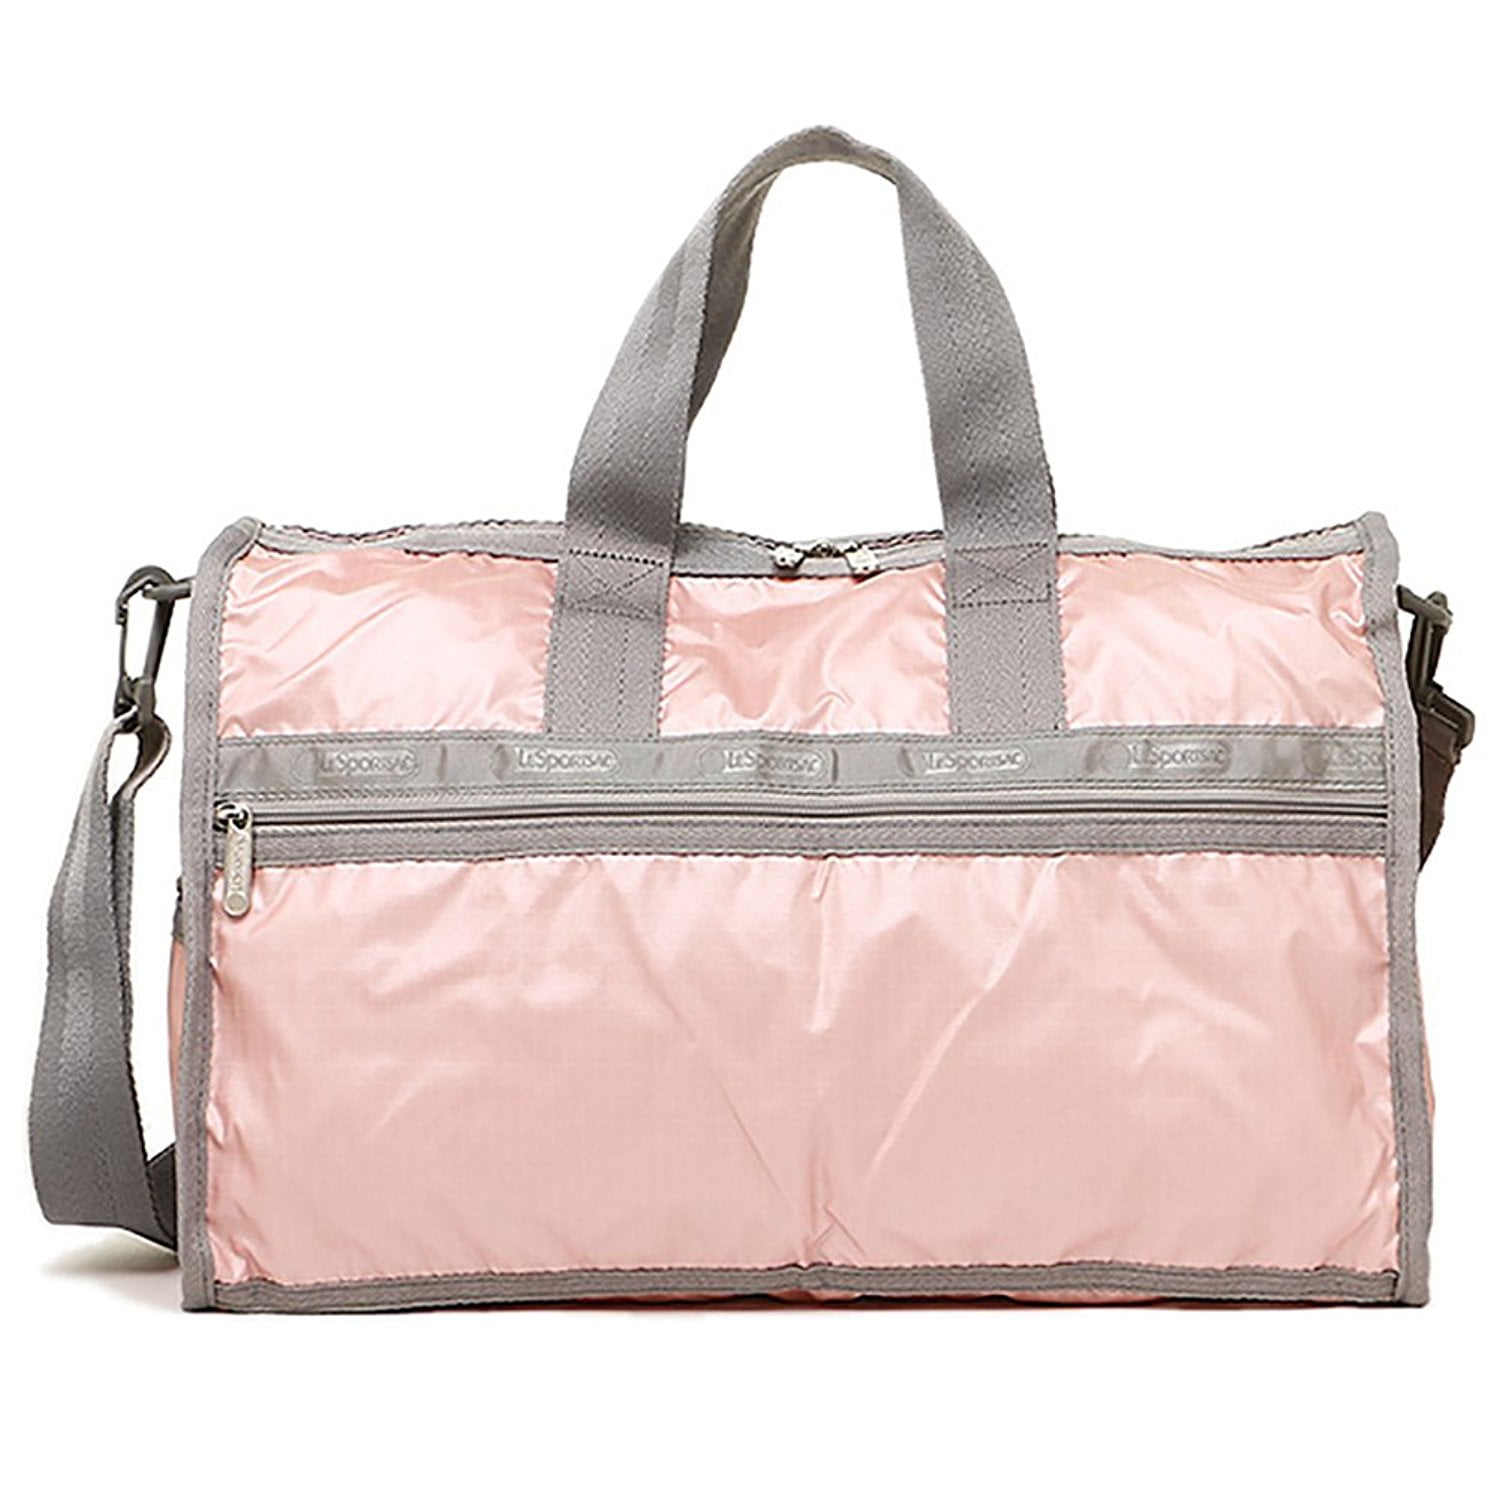 LeSportsac Large Weekender Handbag (Cherry Blossom Lightning) - Walmart.com